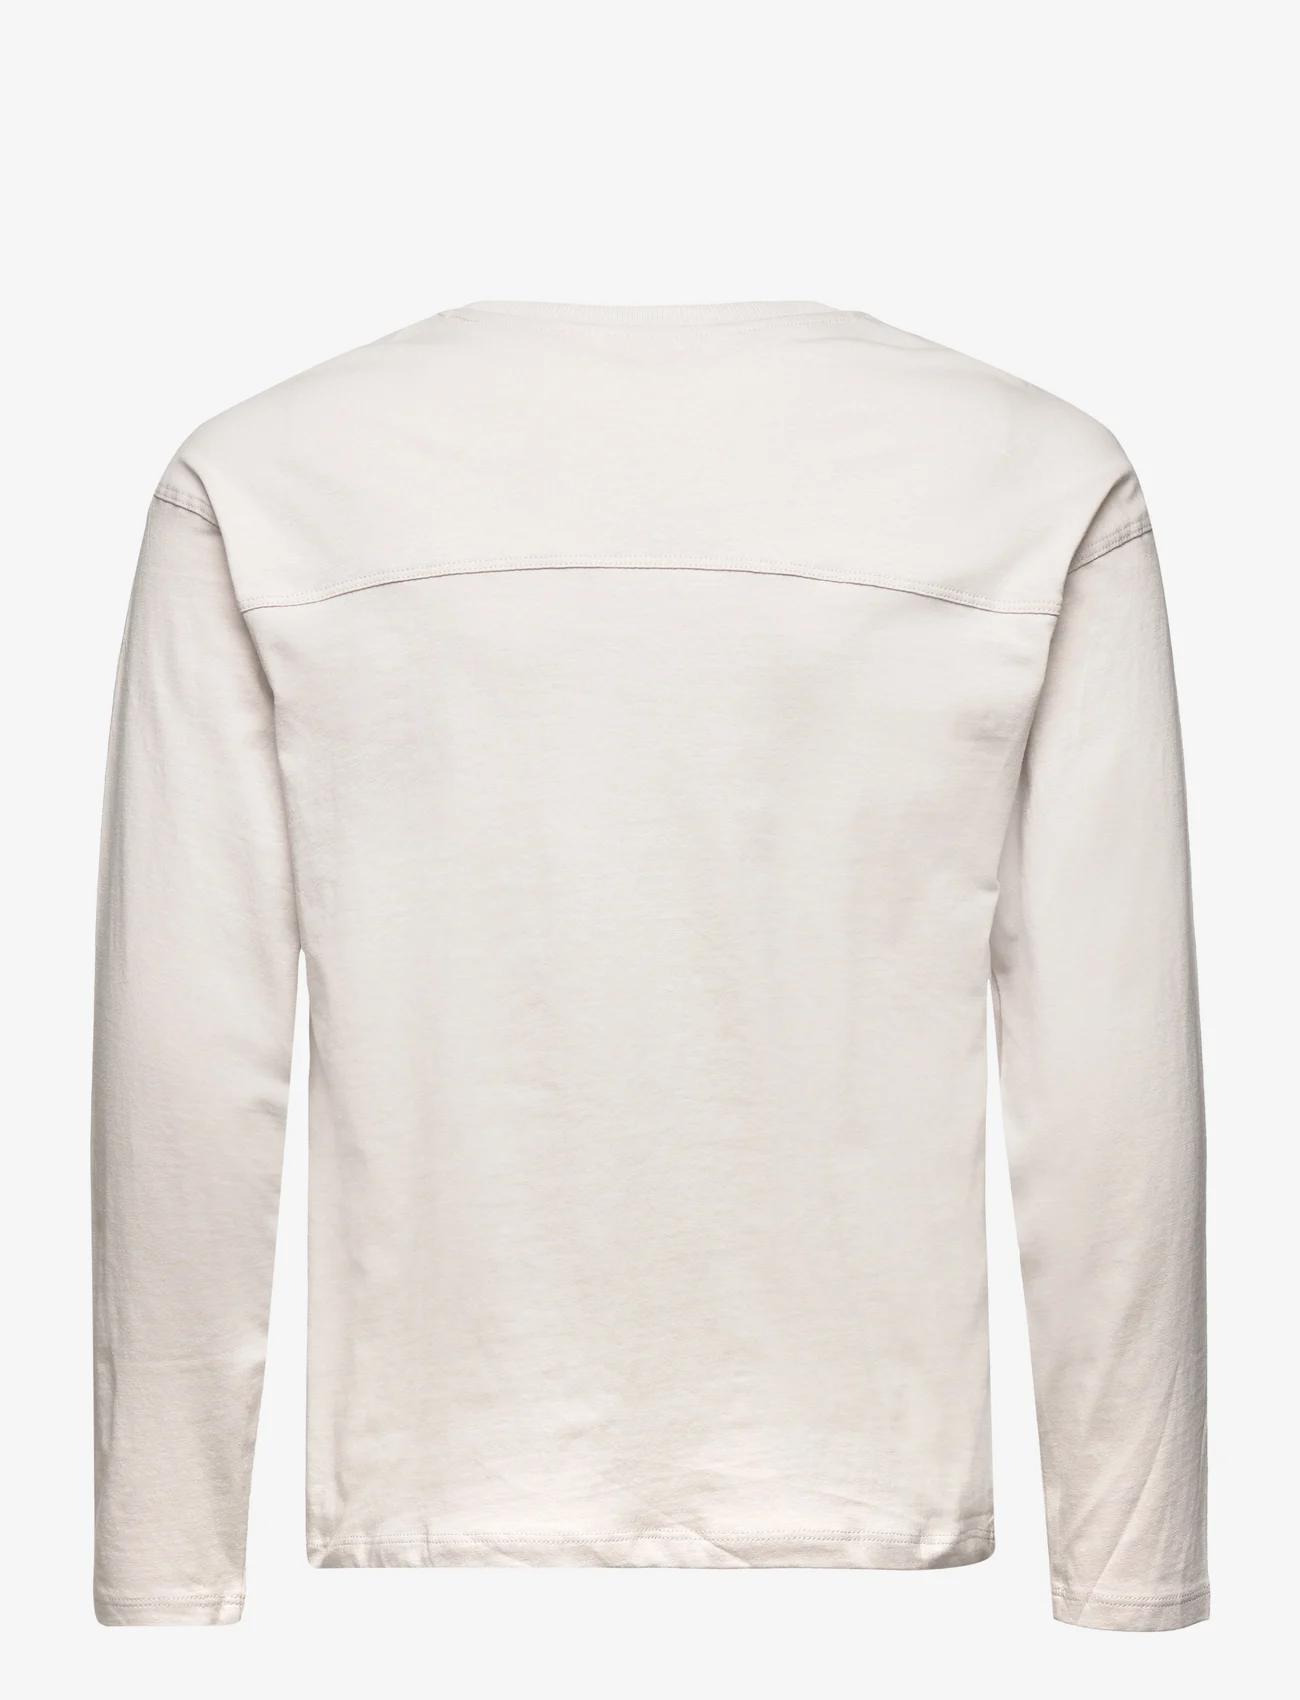 Mango - Printed long sleeve t-shirt - langærmede t-shirts - natural white - 1